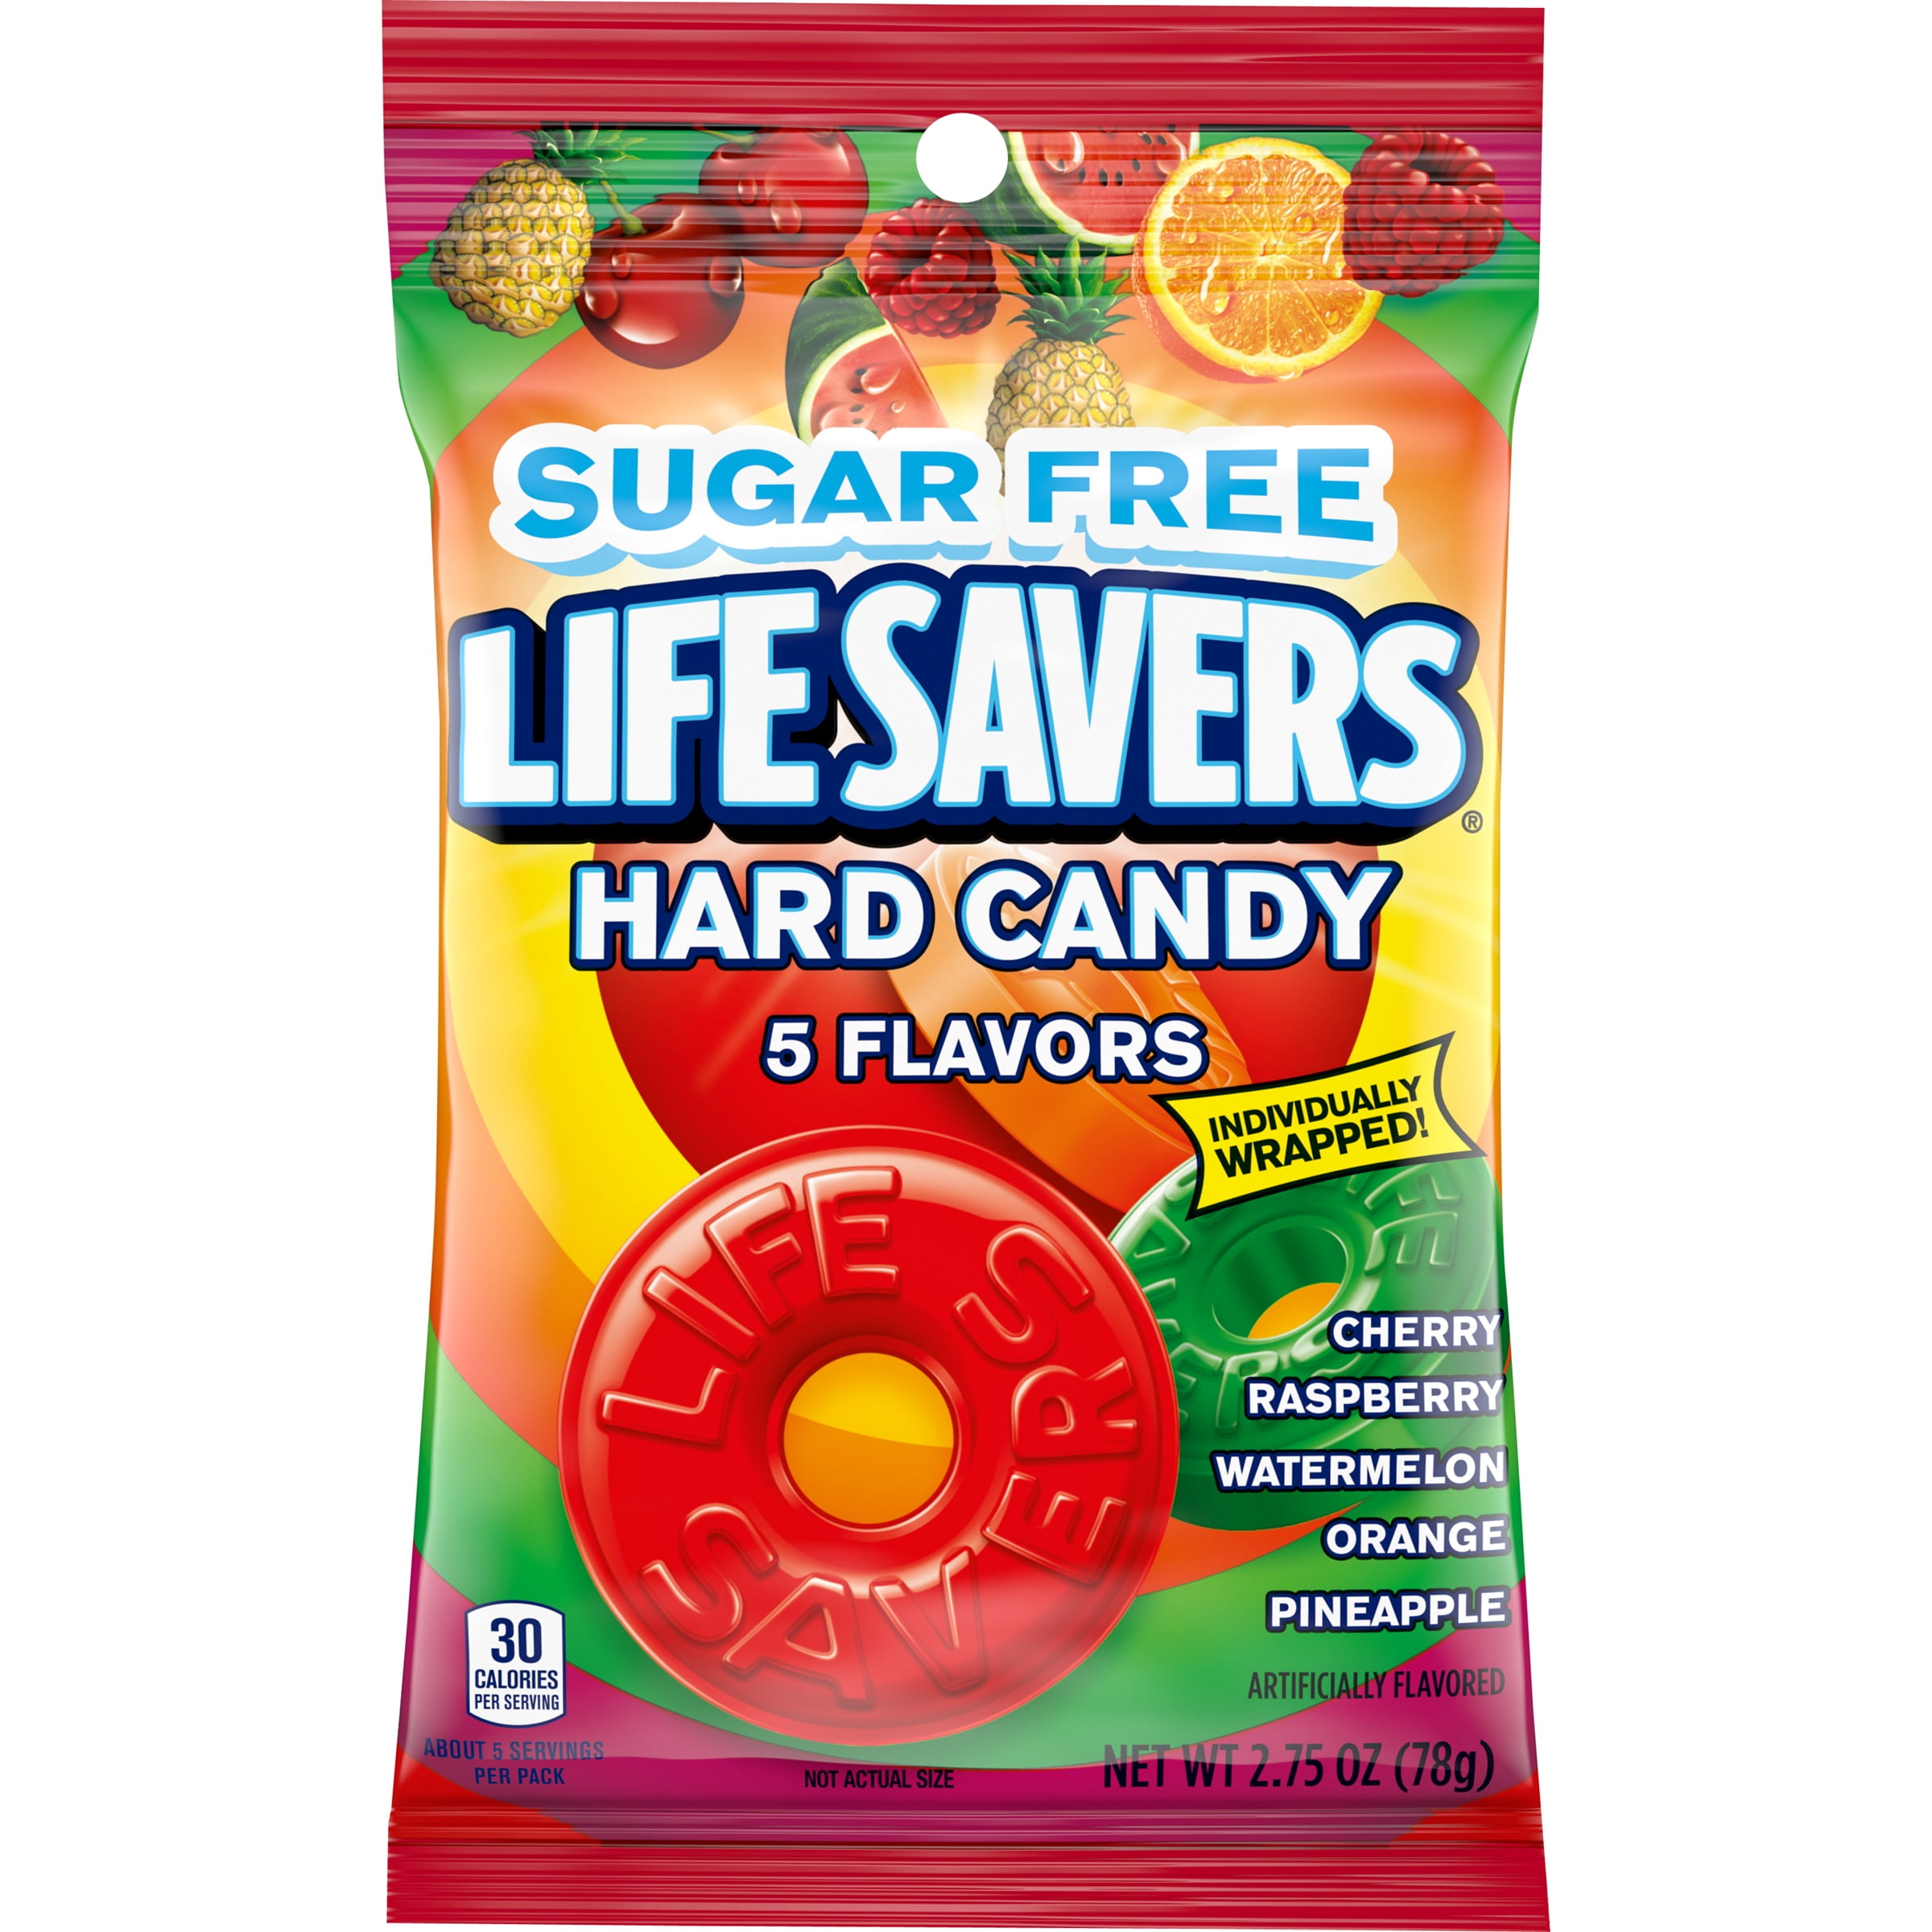 Life Savers Sugar Free 5 Flavors Hard Candy Bag 275 Ounce